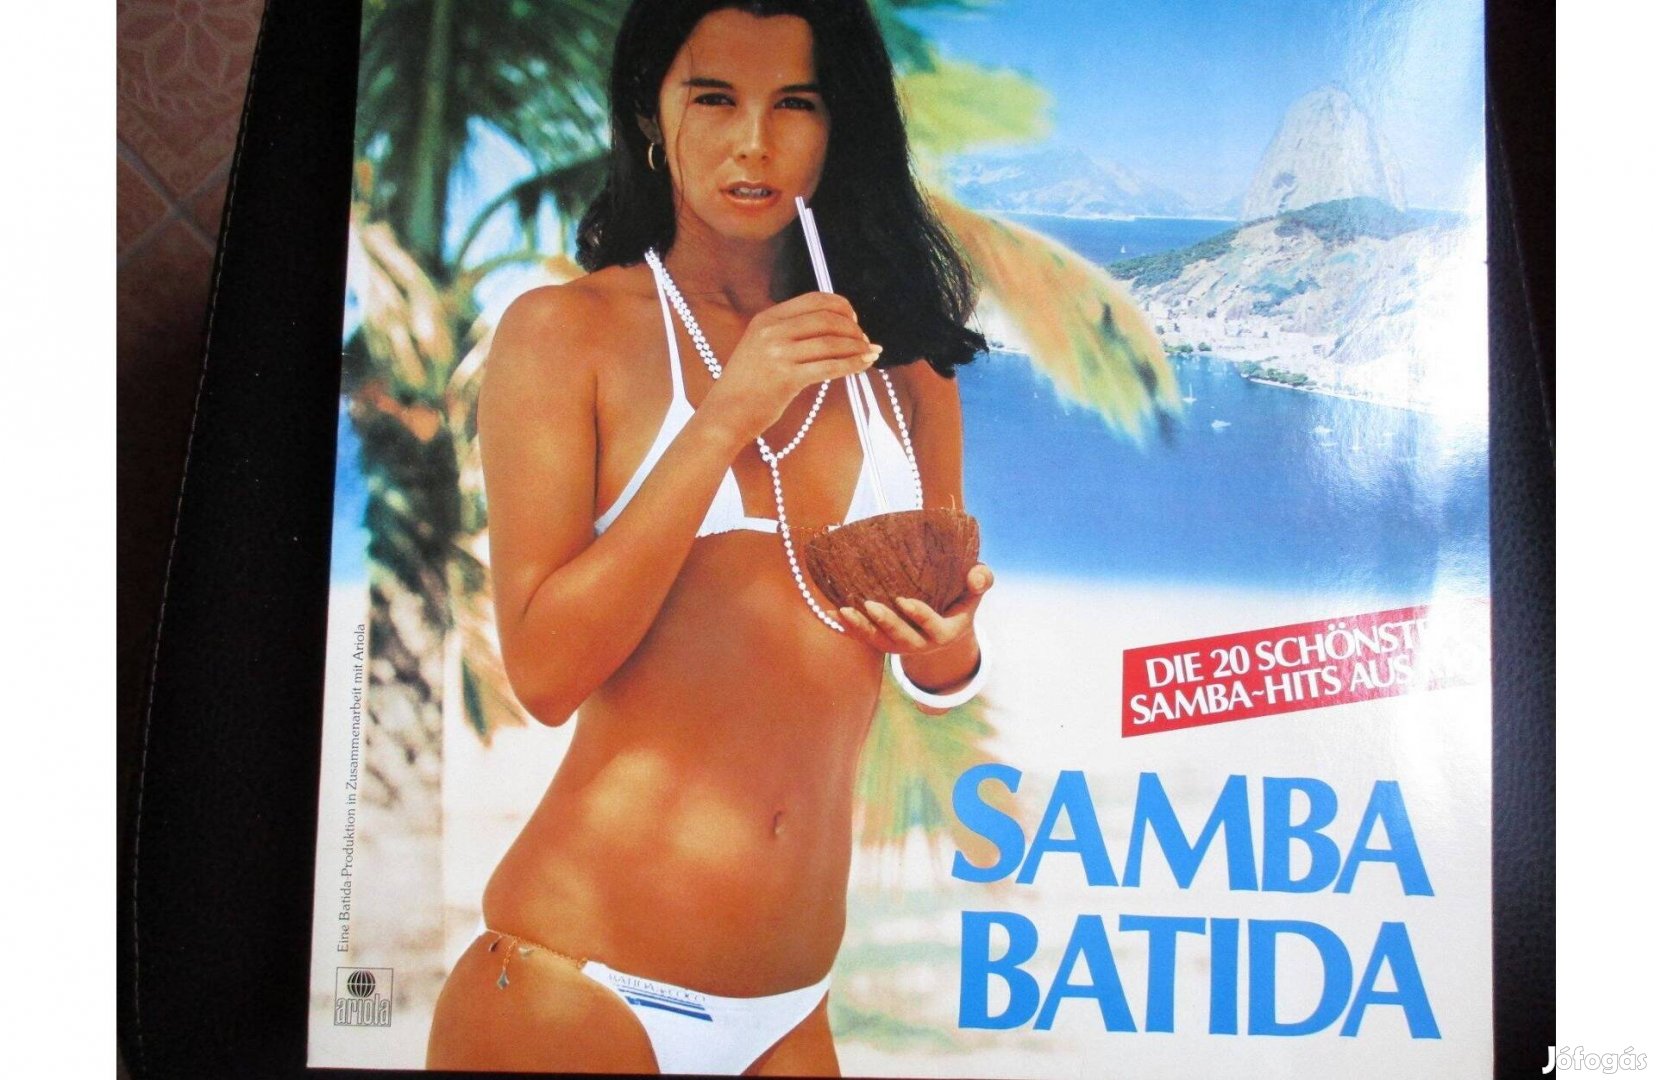 Samba Batida bakelit hanglemez eladó